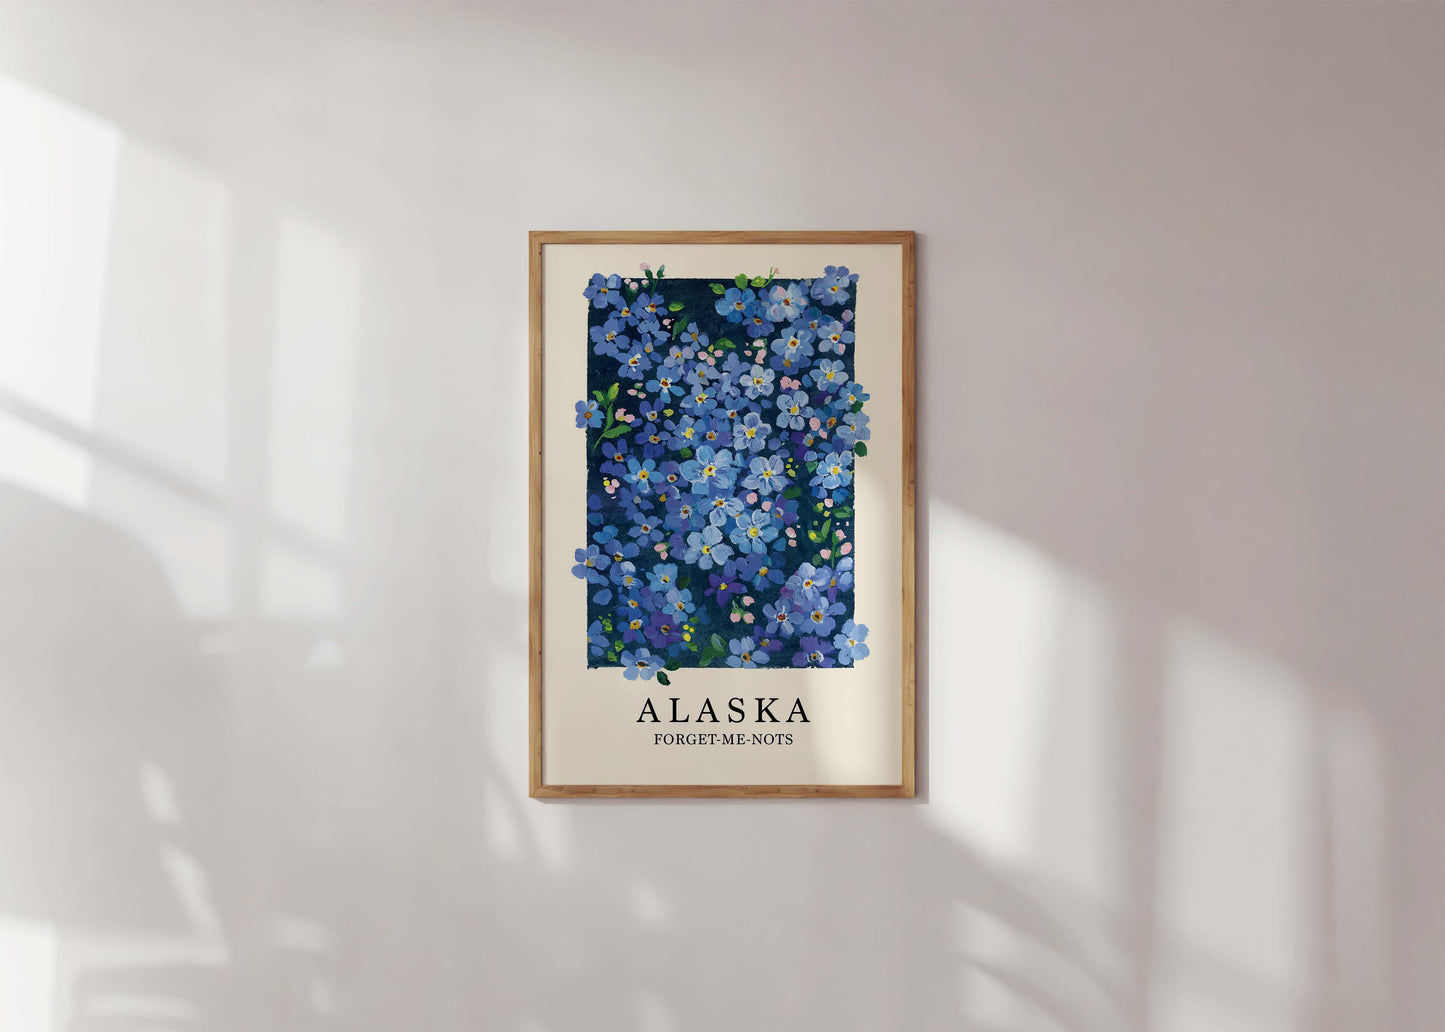 Forget-me-nots gouache painting- Alaska's state flower- Gouache art print